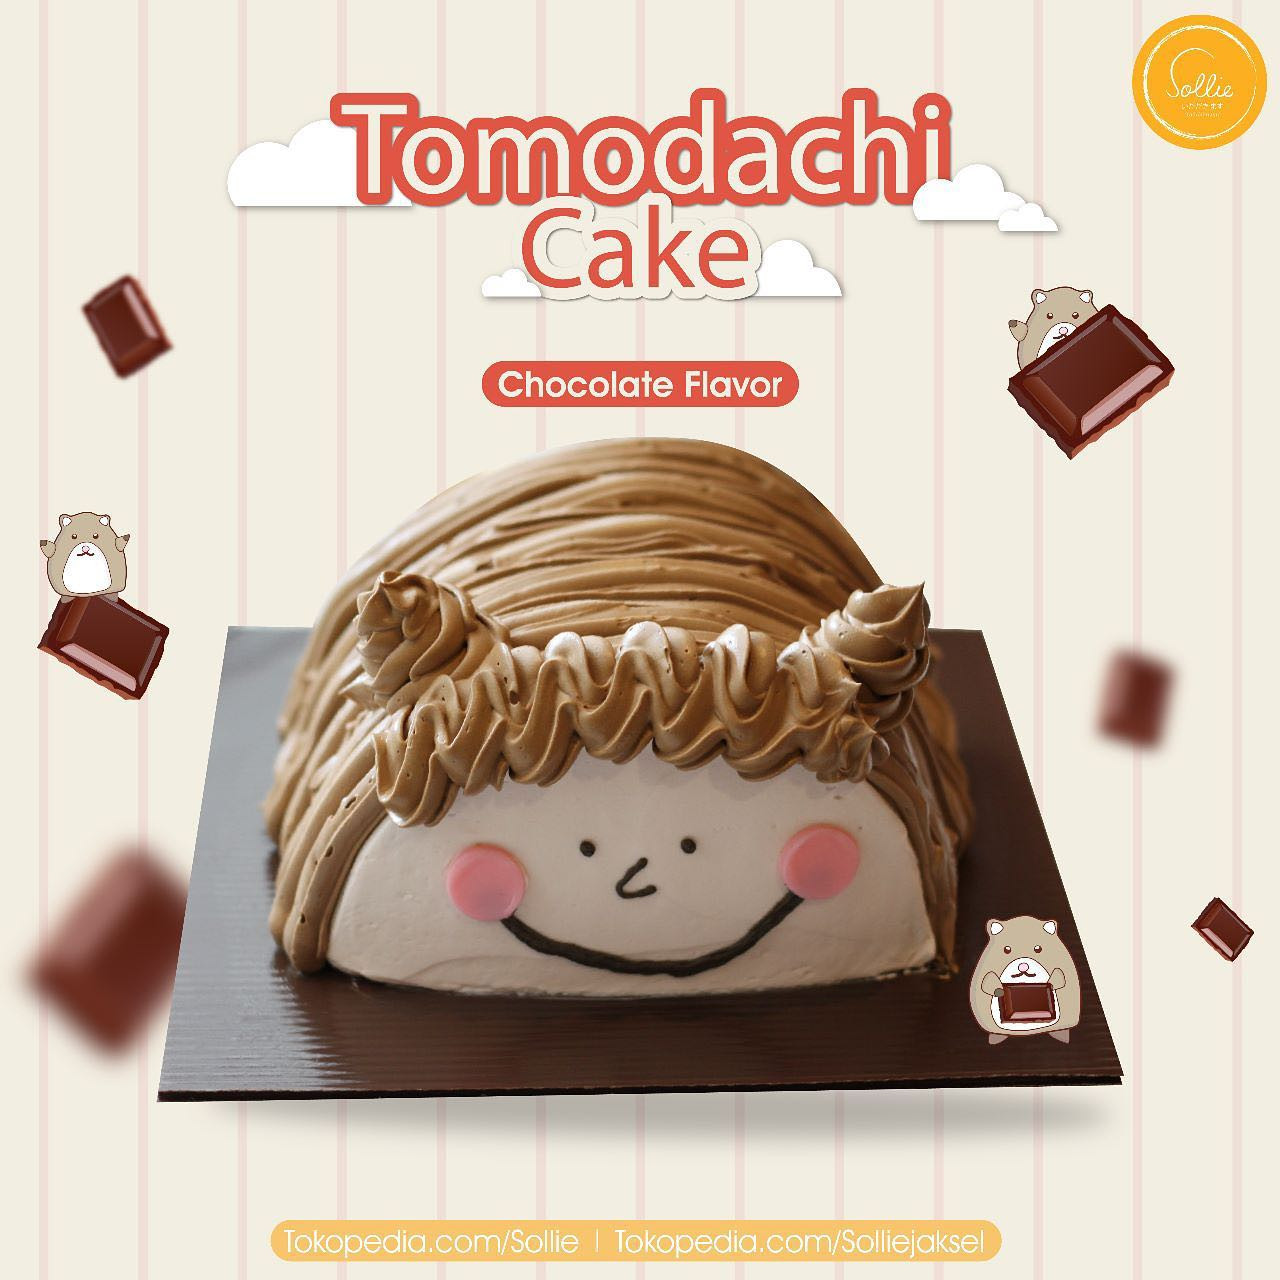 Tomodachi Cake